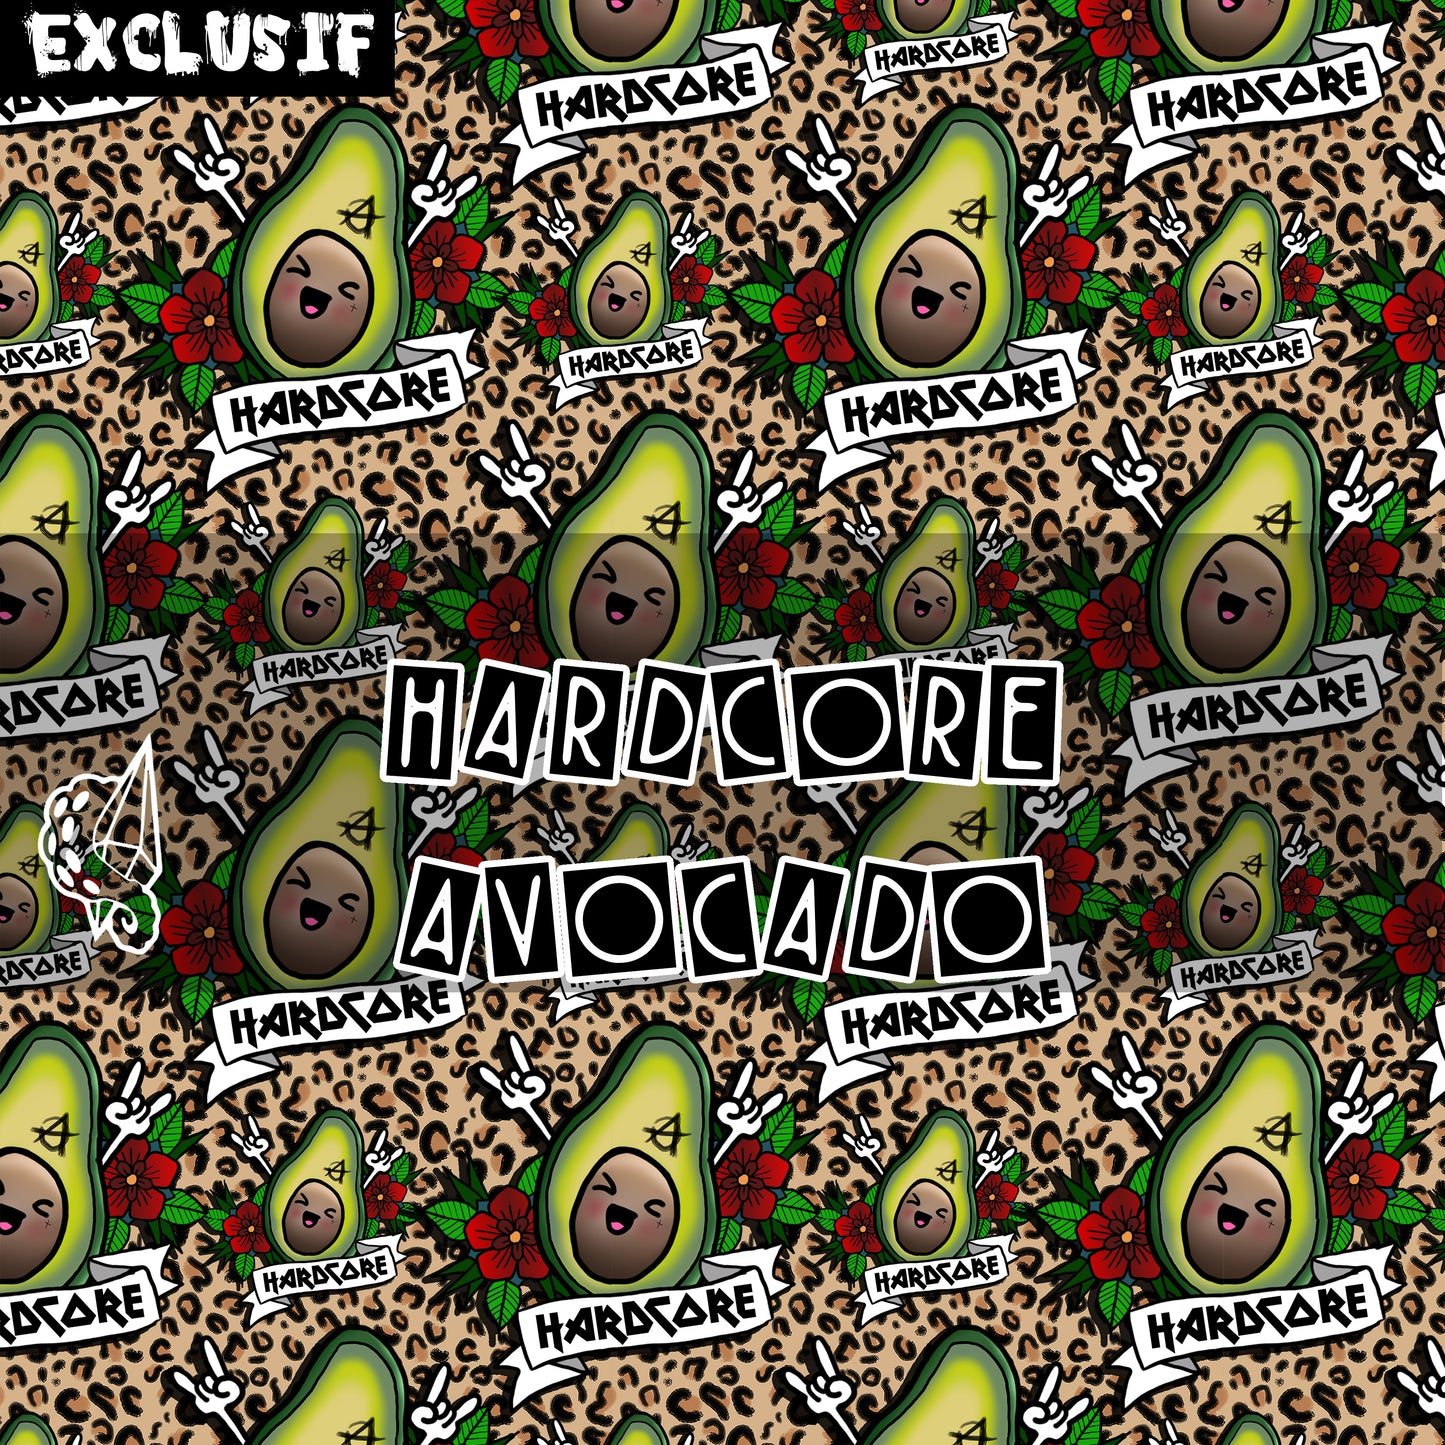 Hardcore avocado